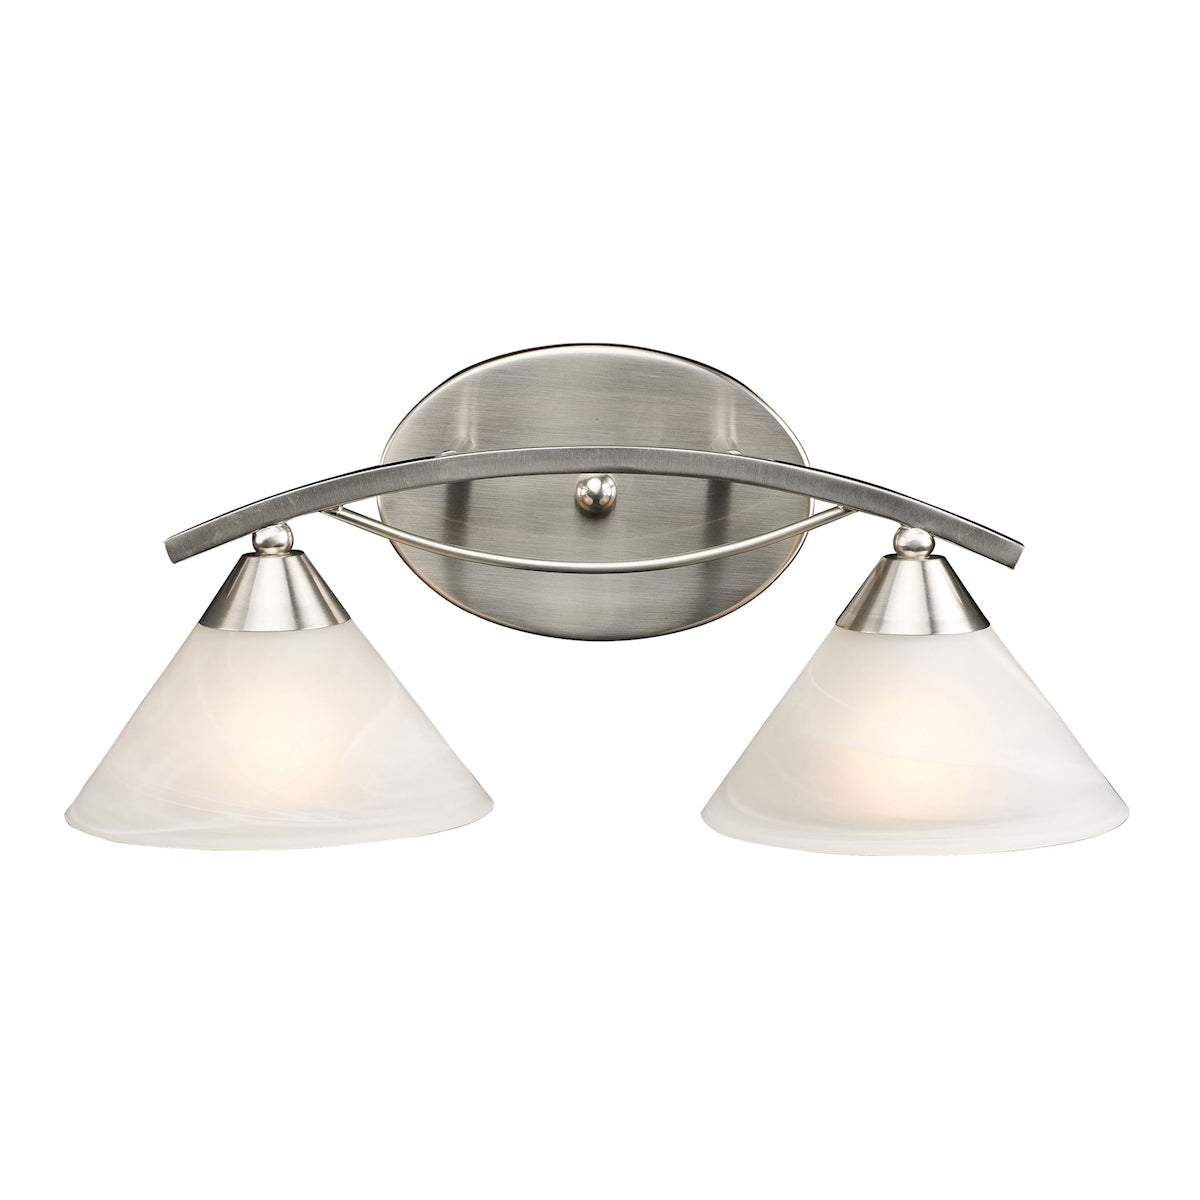 ELK Lighting 7631/2 Elysburg 2-Light Vanity Lamp in Satin Nickel with White Swirl Glass